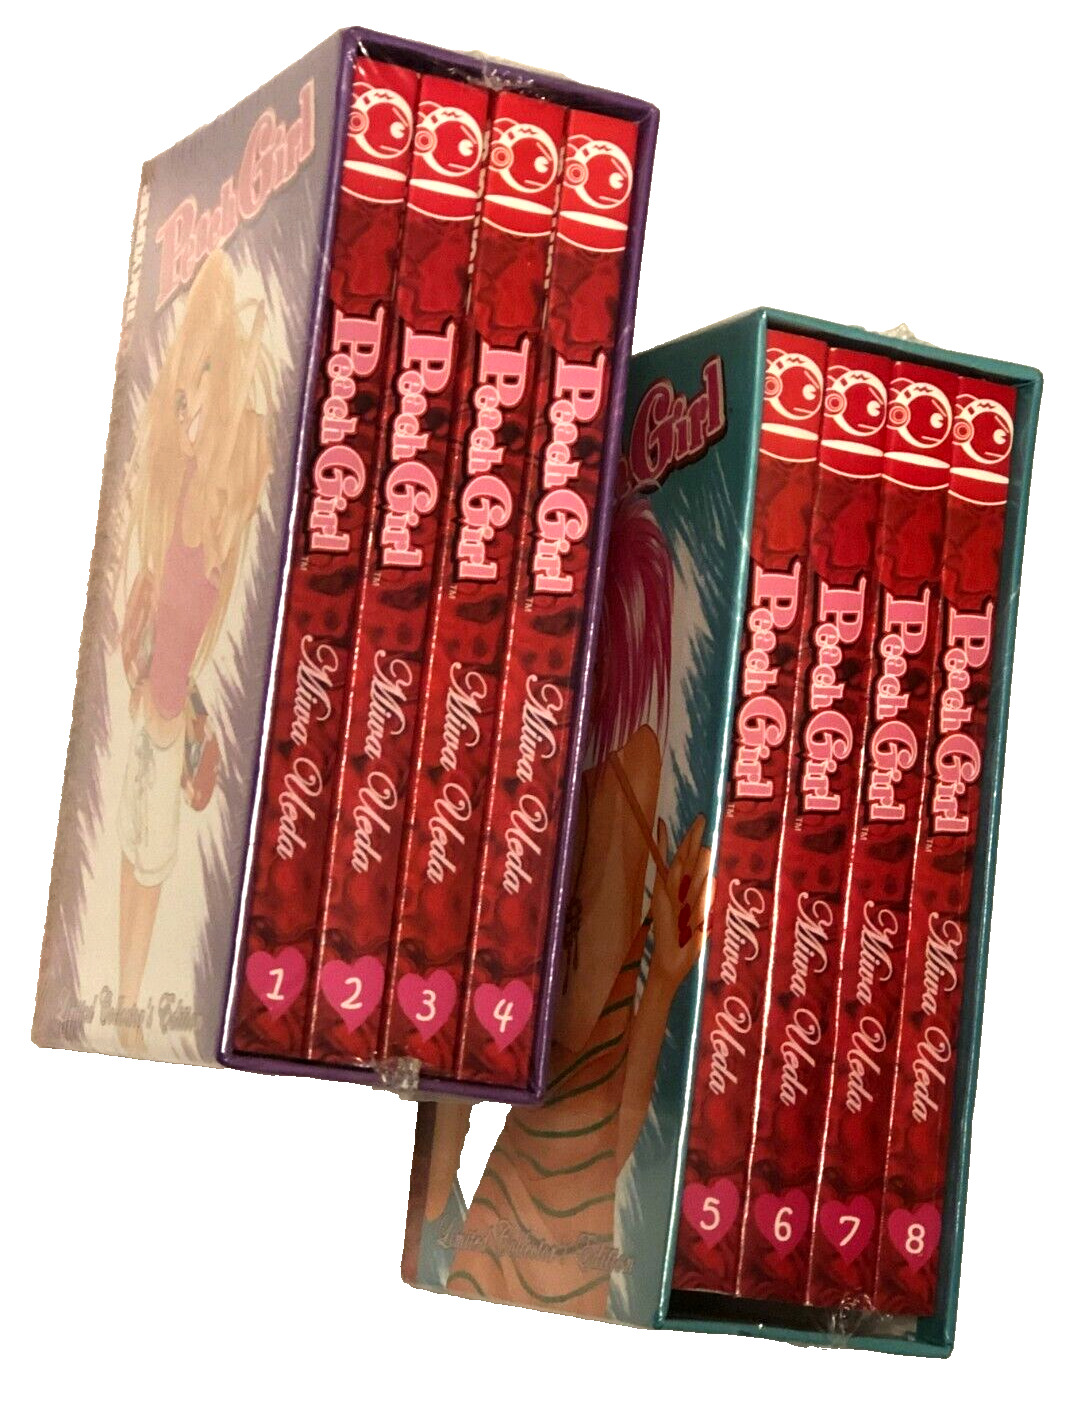 PEACH GIRL Miwa Ueda Limited Edition English Manga Volumes 1 to 8 Box Set Sealed